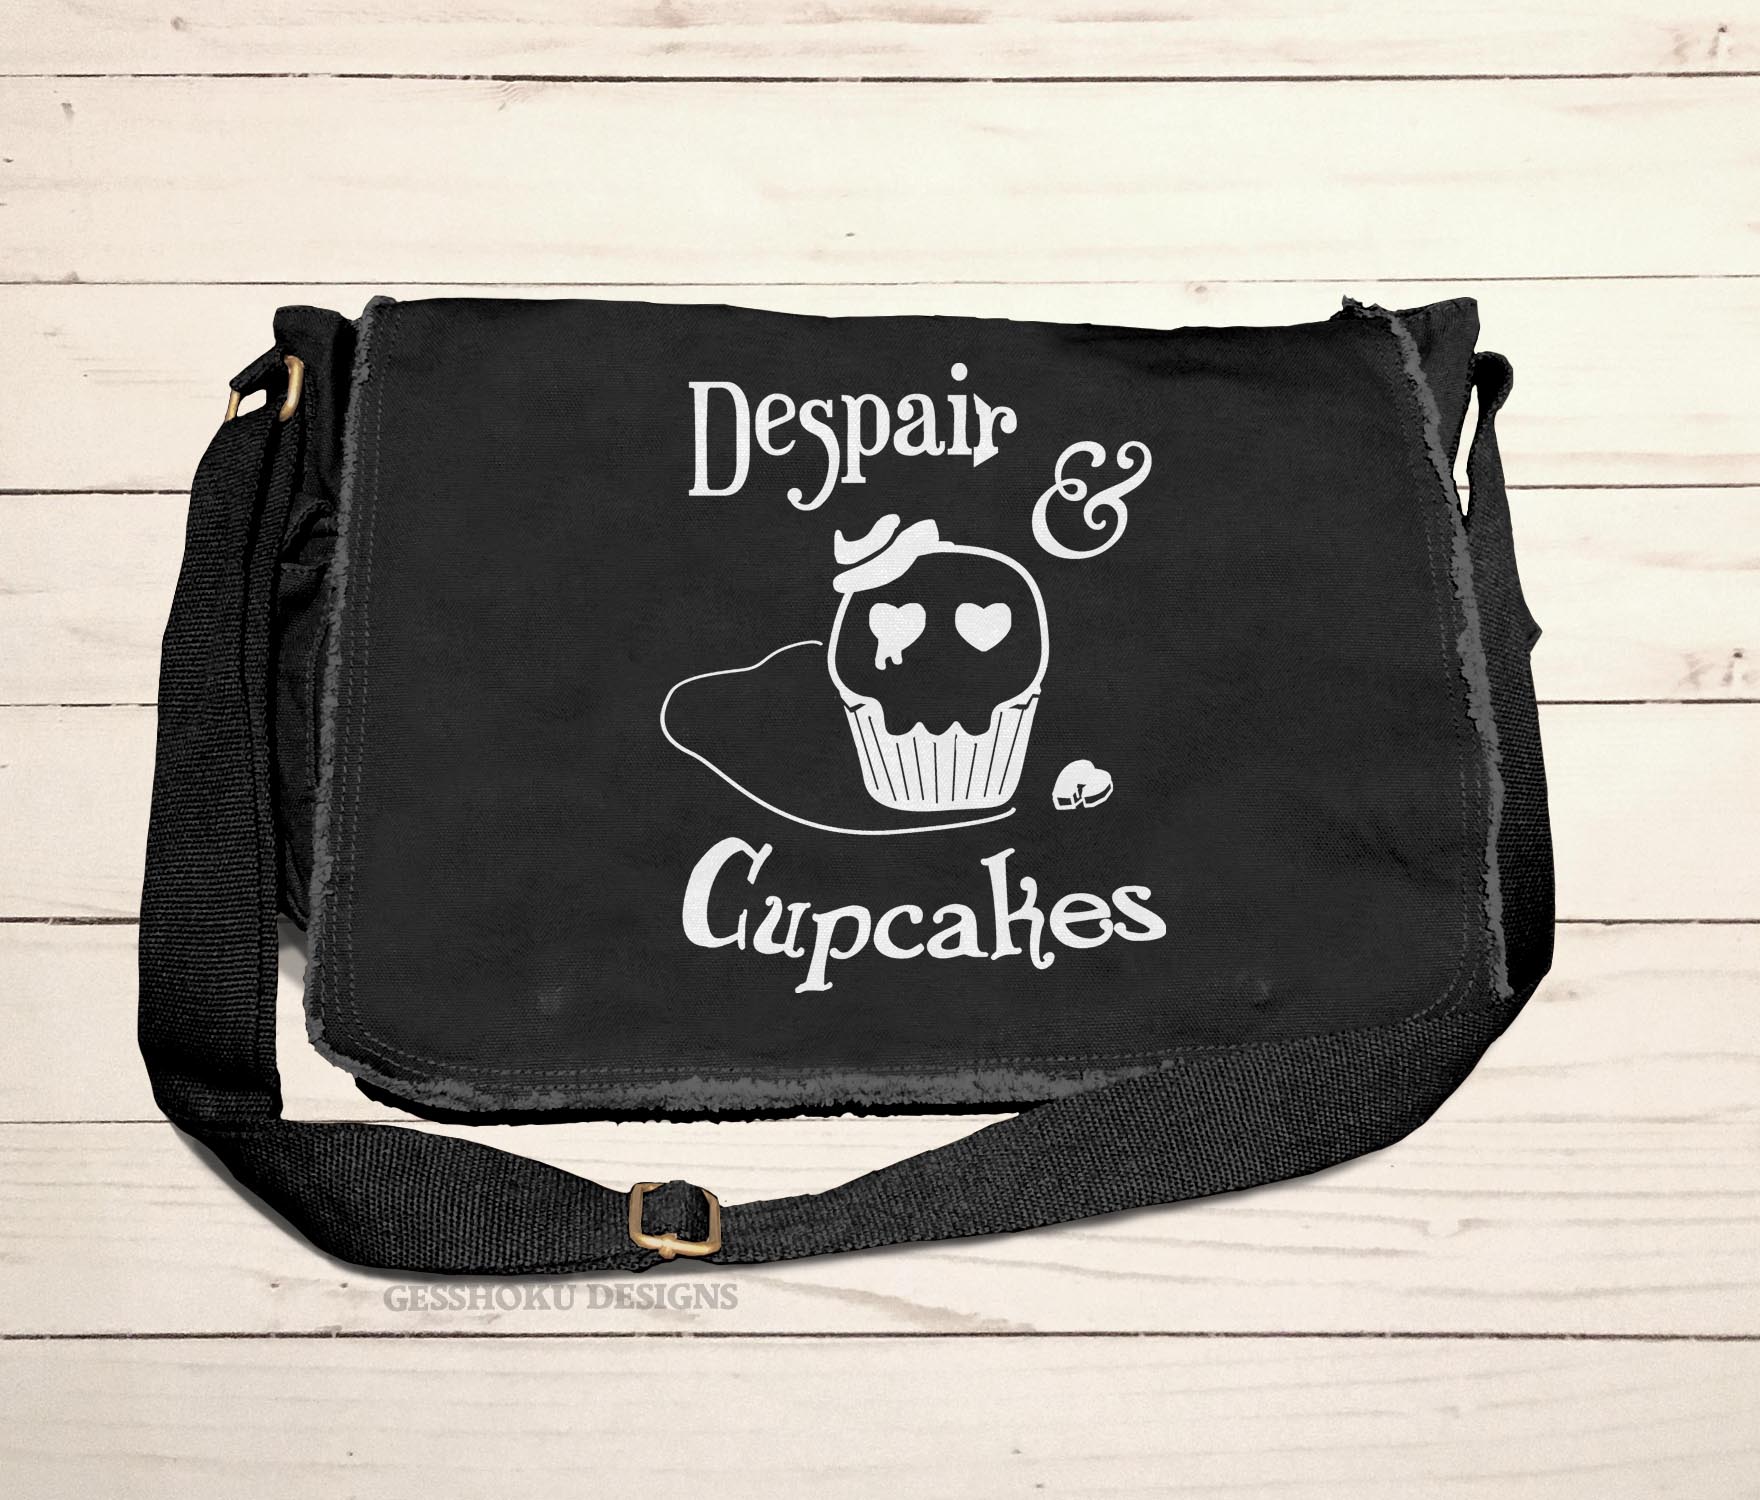 Despair and Cupcakes Messenger Bag - Black